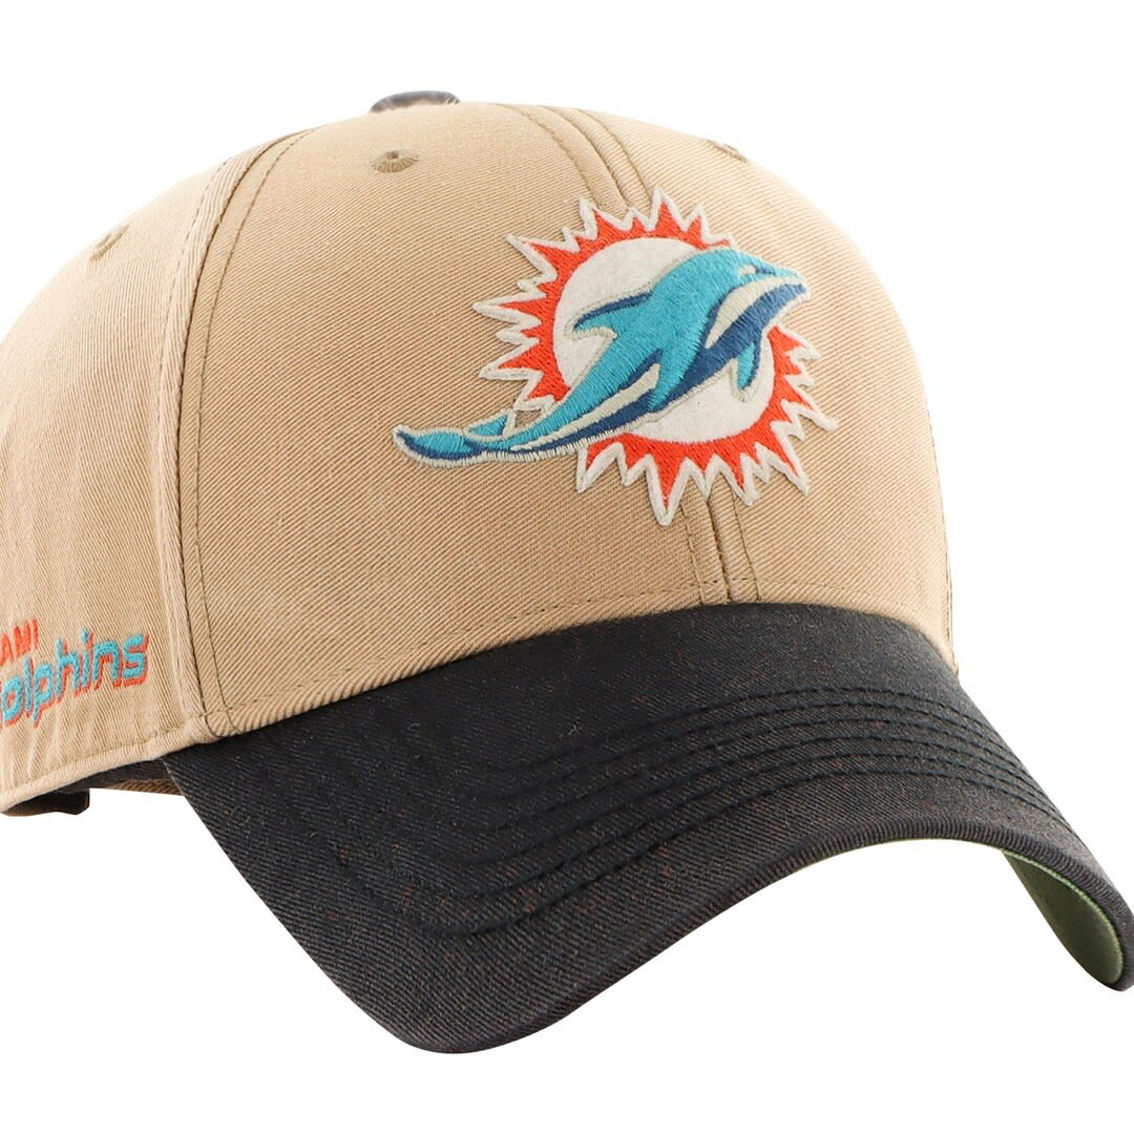 '47 Men's Khaki/Black Miami Dolphins Dusted Sedgwick MVP Adjustable Hat - Image 2 of 4